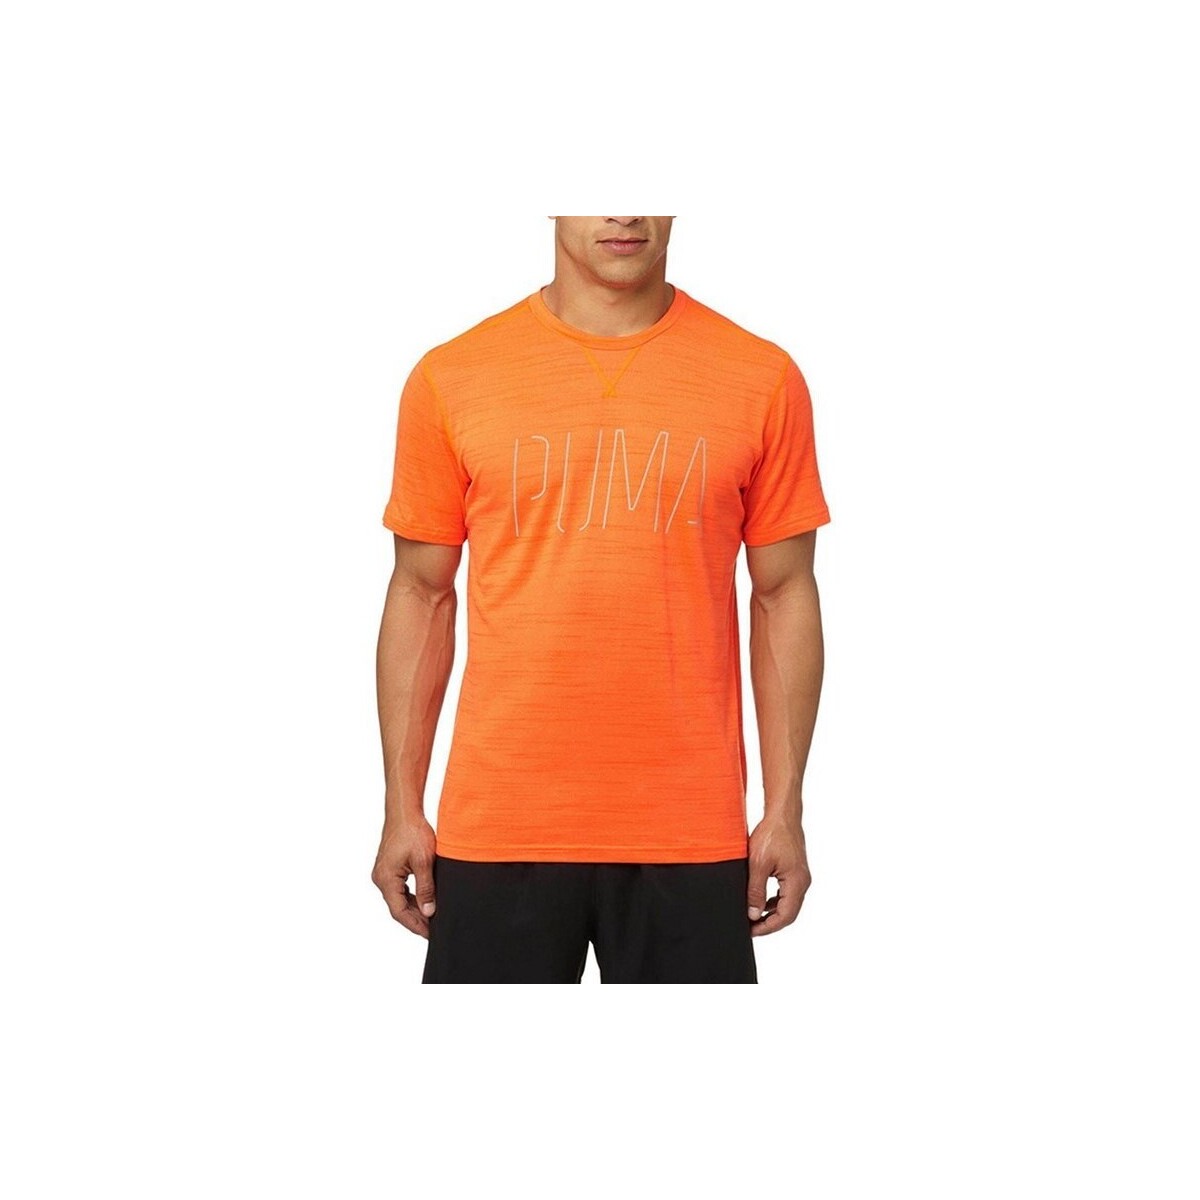 textil Hombre Camisetas manga corta Puma 514358 Naranja